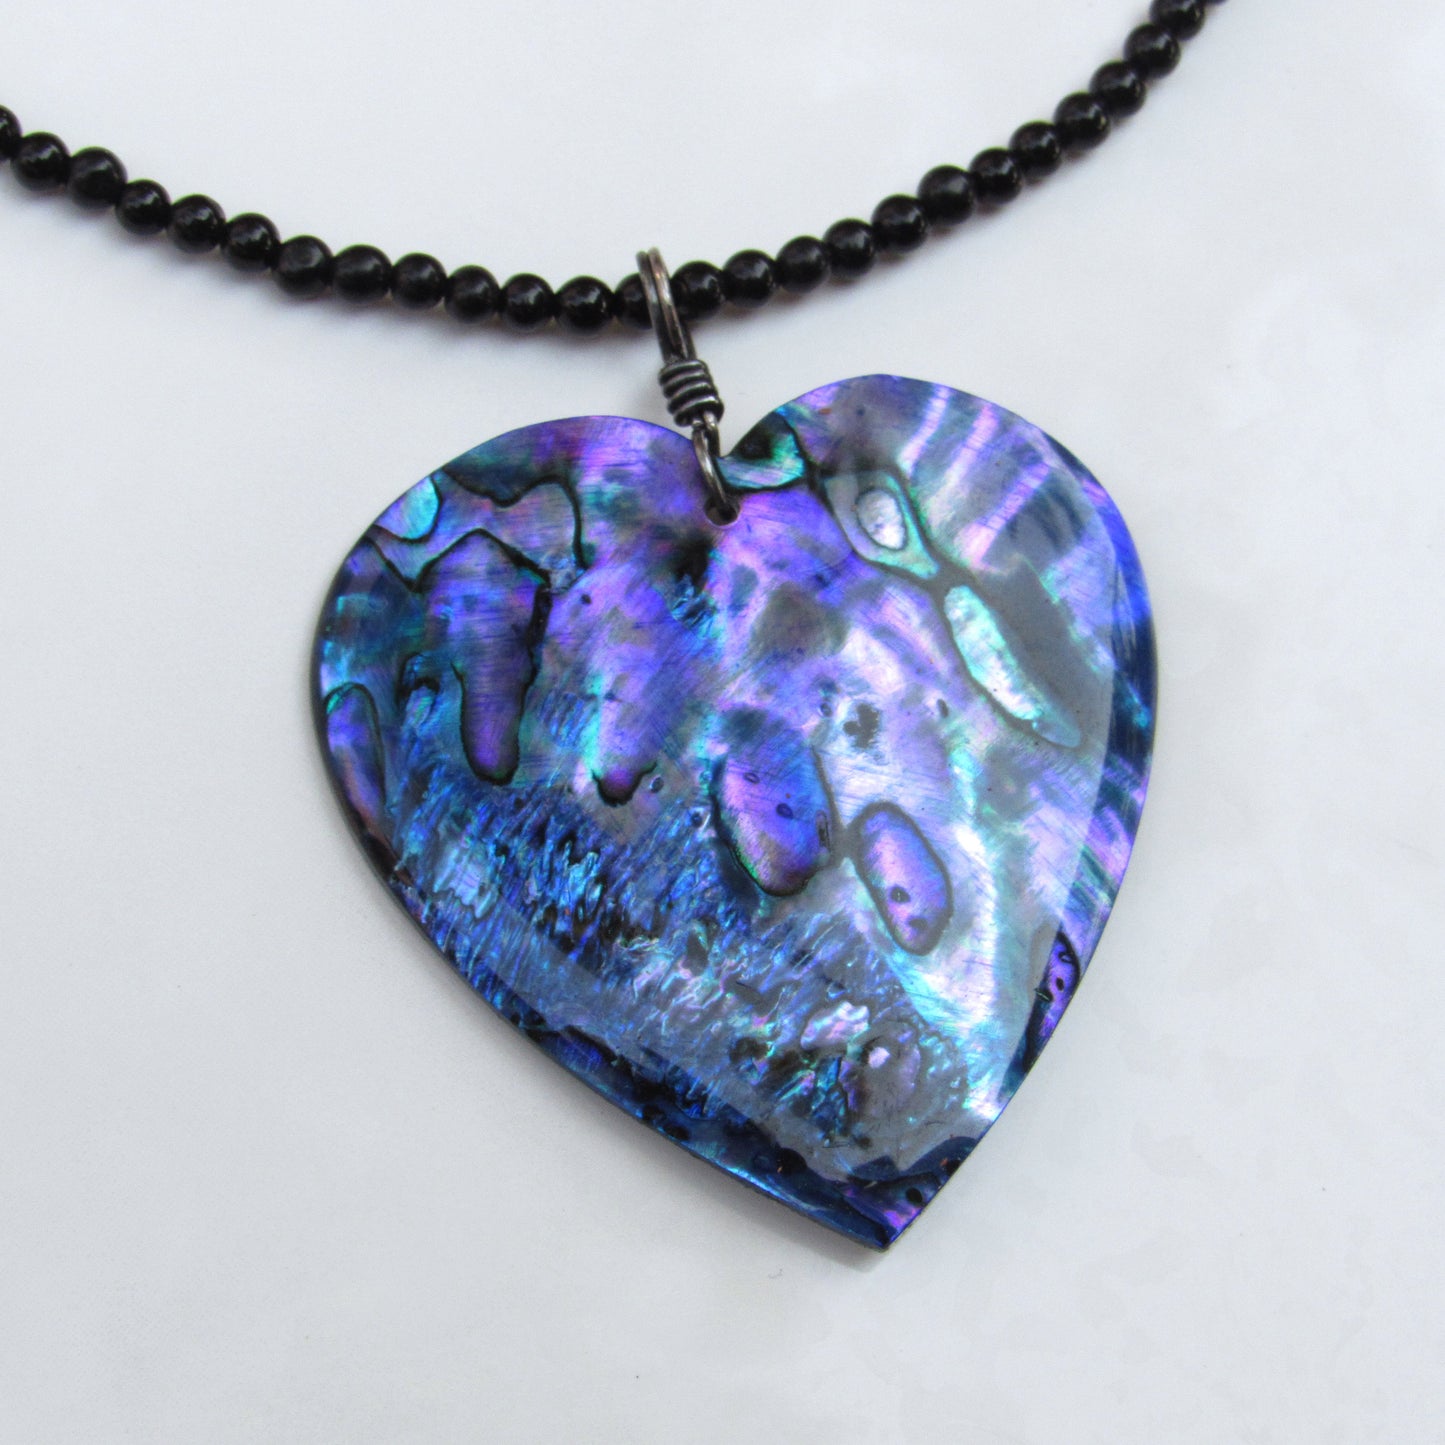 Abalone Shell Heart Pendant on Onyx beaded Necklace